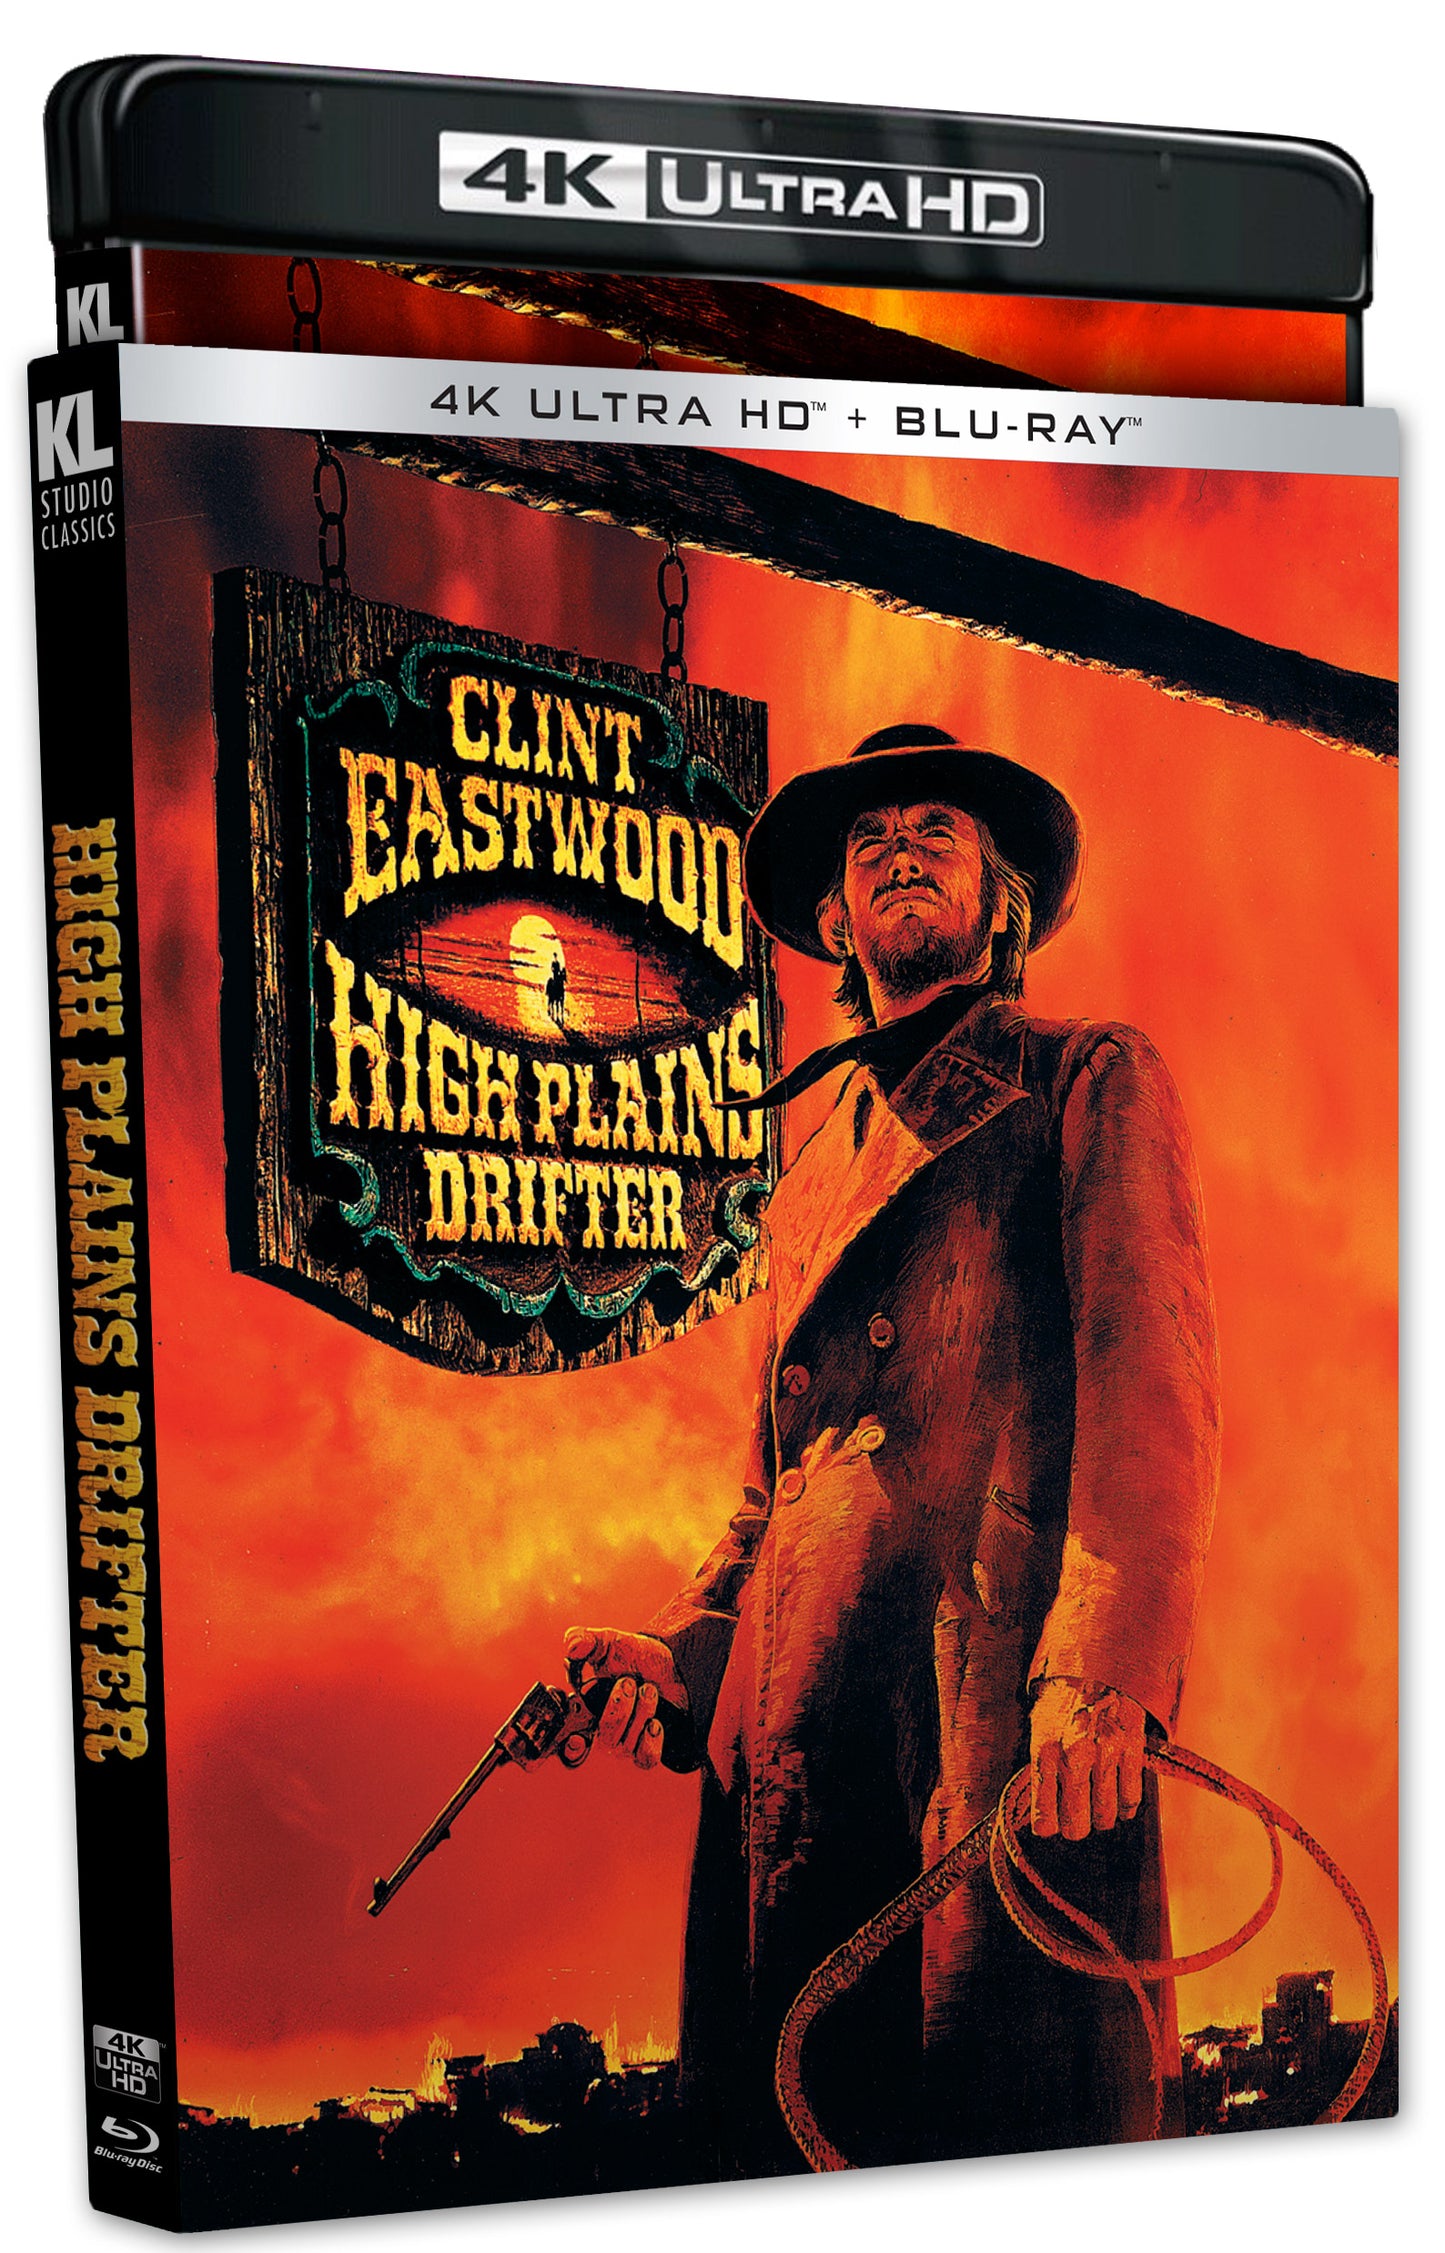 High Plains Drifter 4K UHD + Blu-ray  with Slipcover (Kino Lorber)